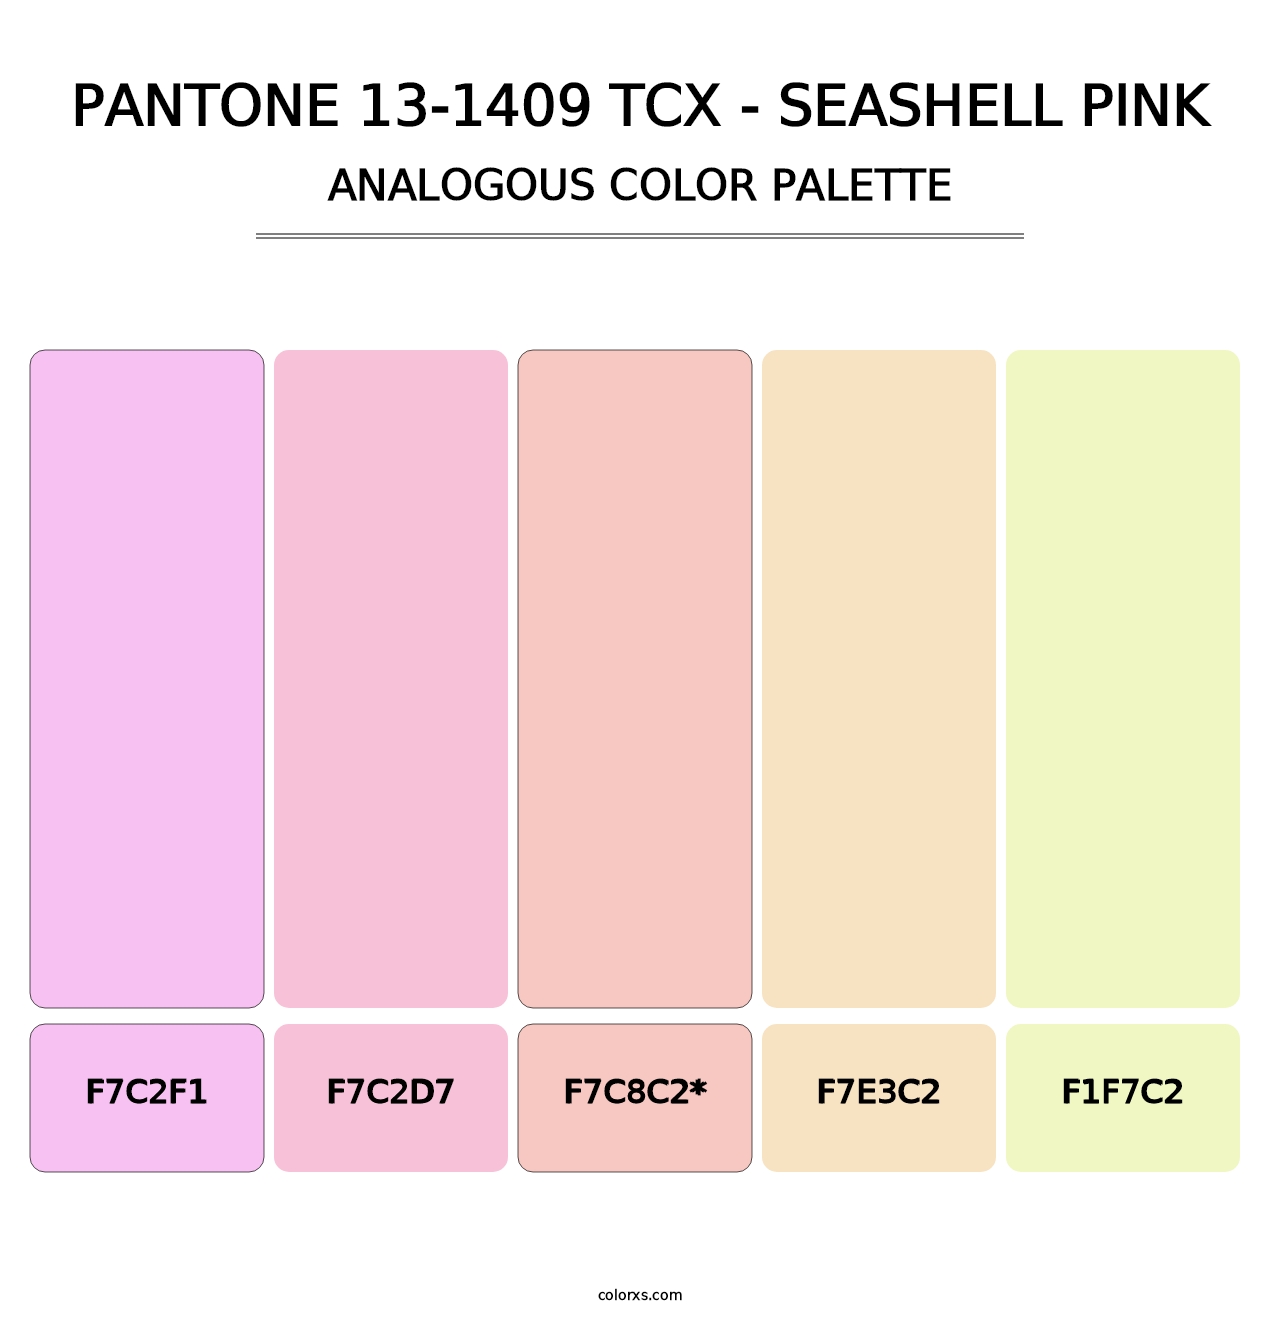 PANTONE 13-1409 TCX - Seashell Pink - Analogous Color Palette